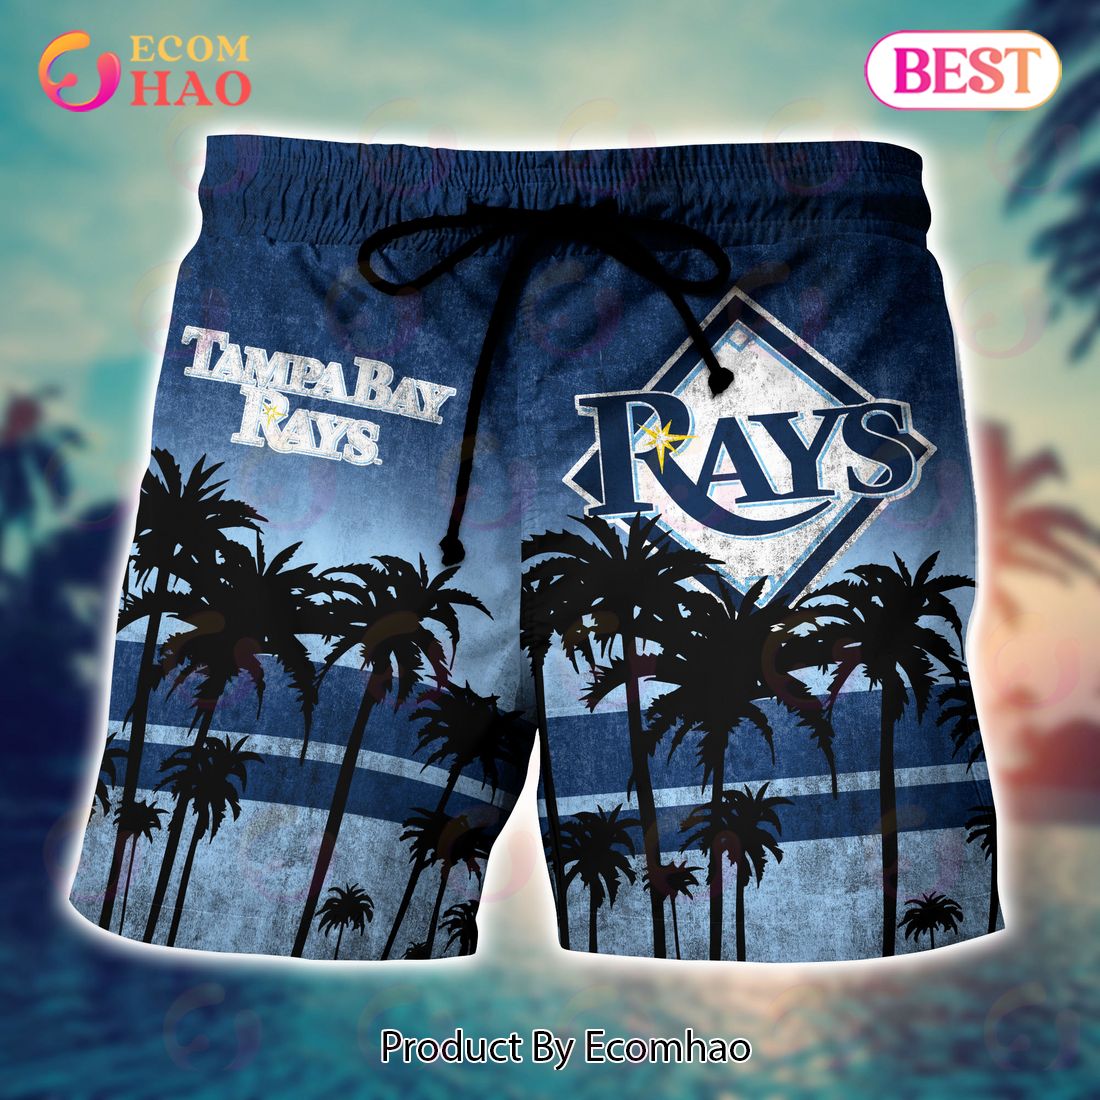 Tampa Bay Rays Major League Baseball 3D Print Hawaiian Shirt Gift For Men  And Women